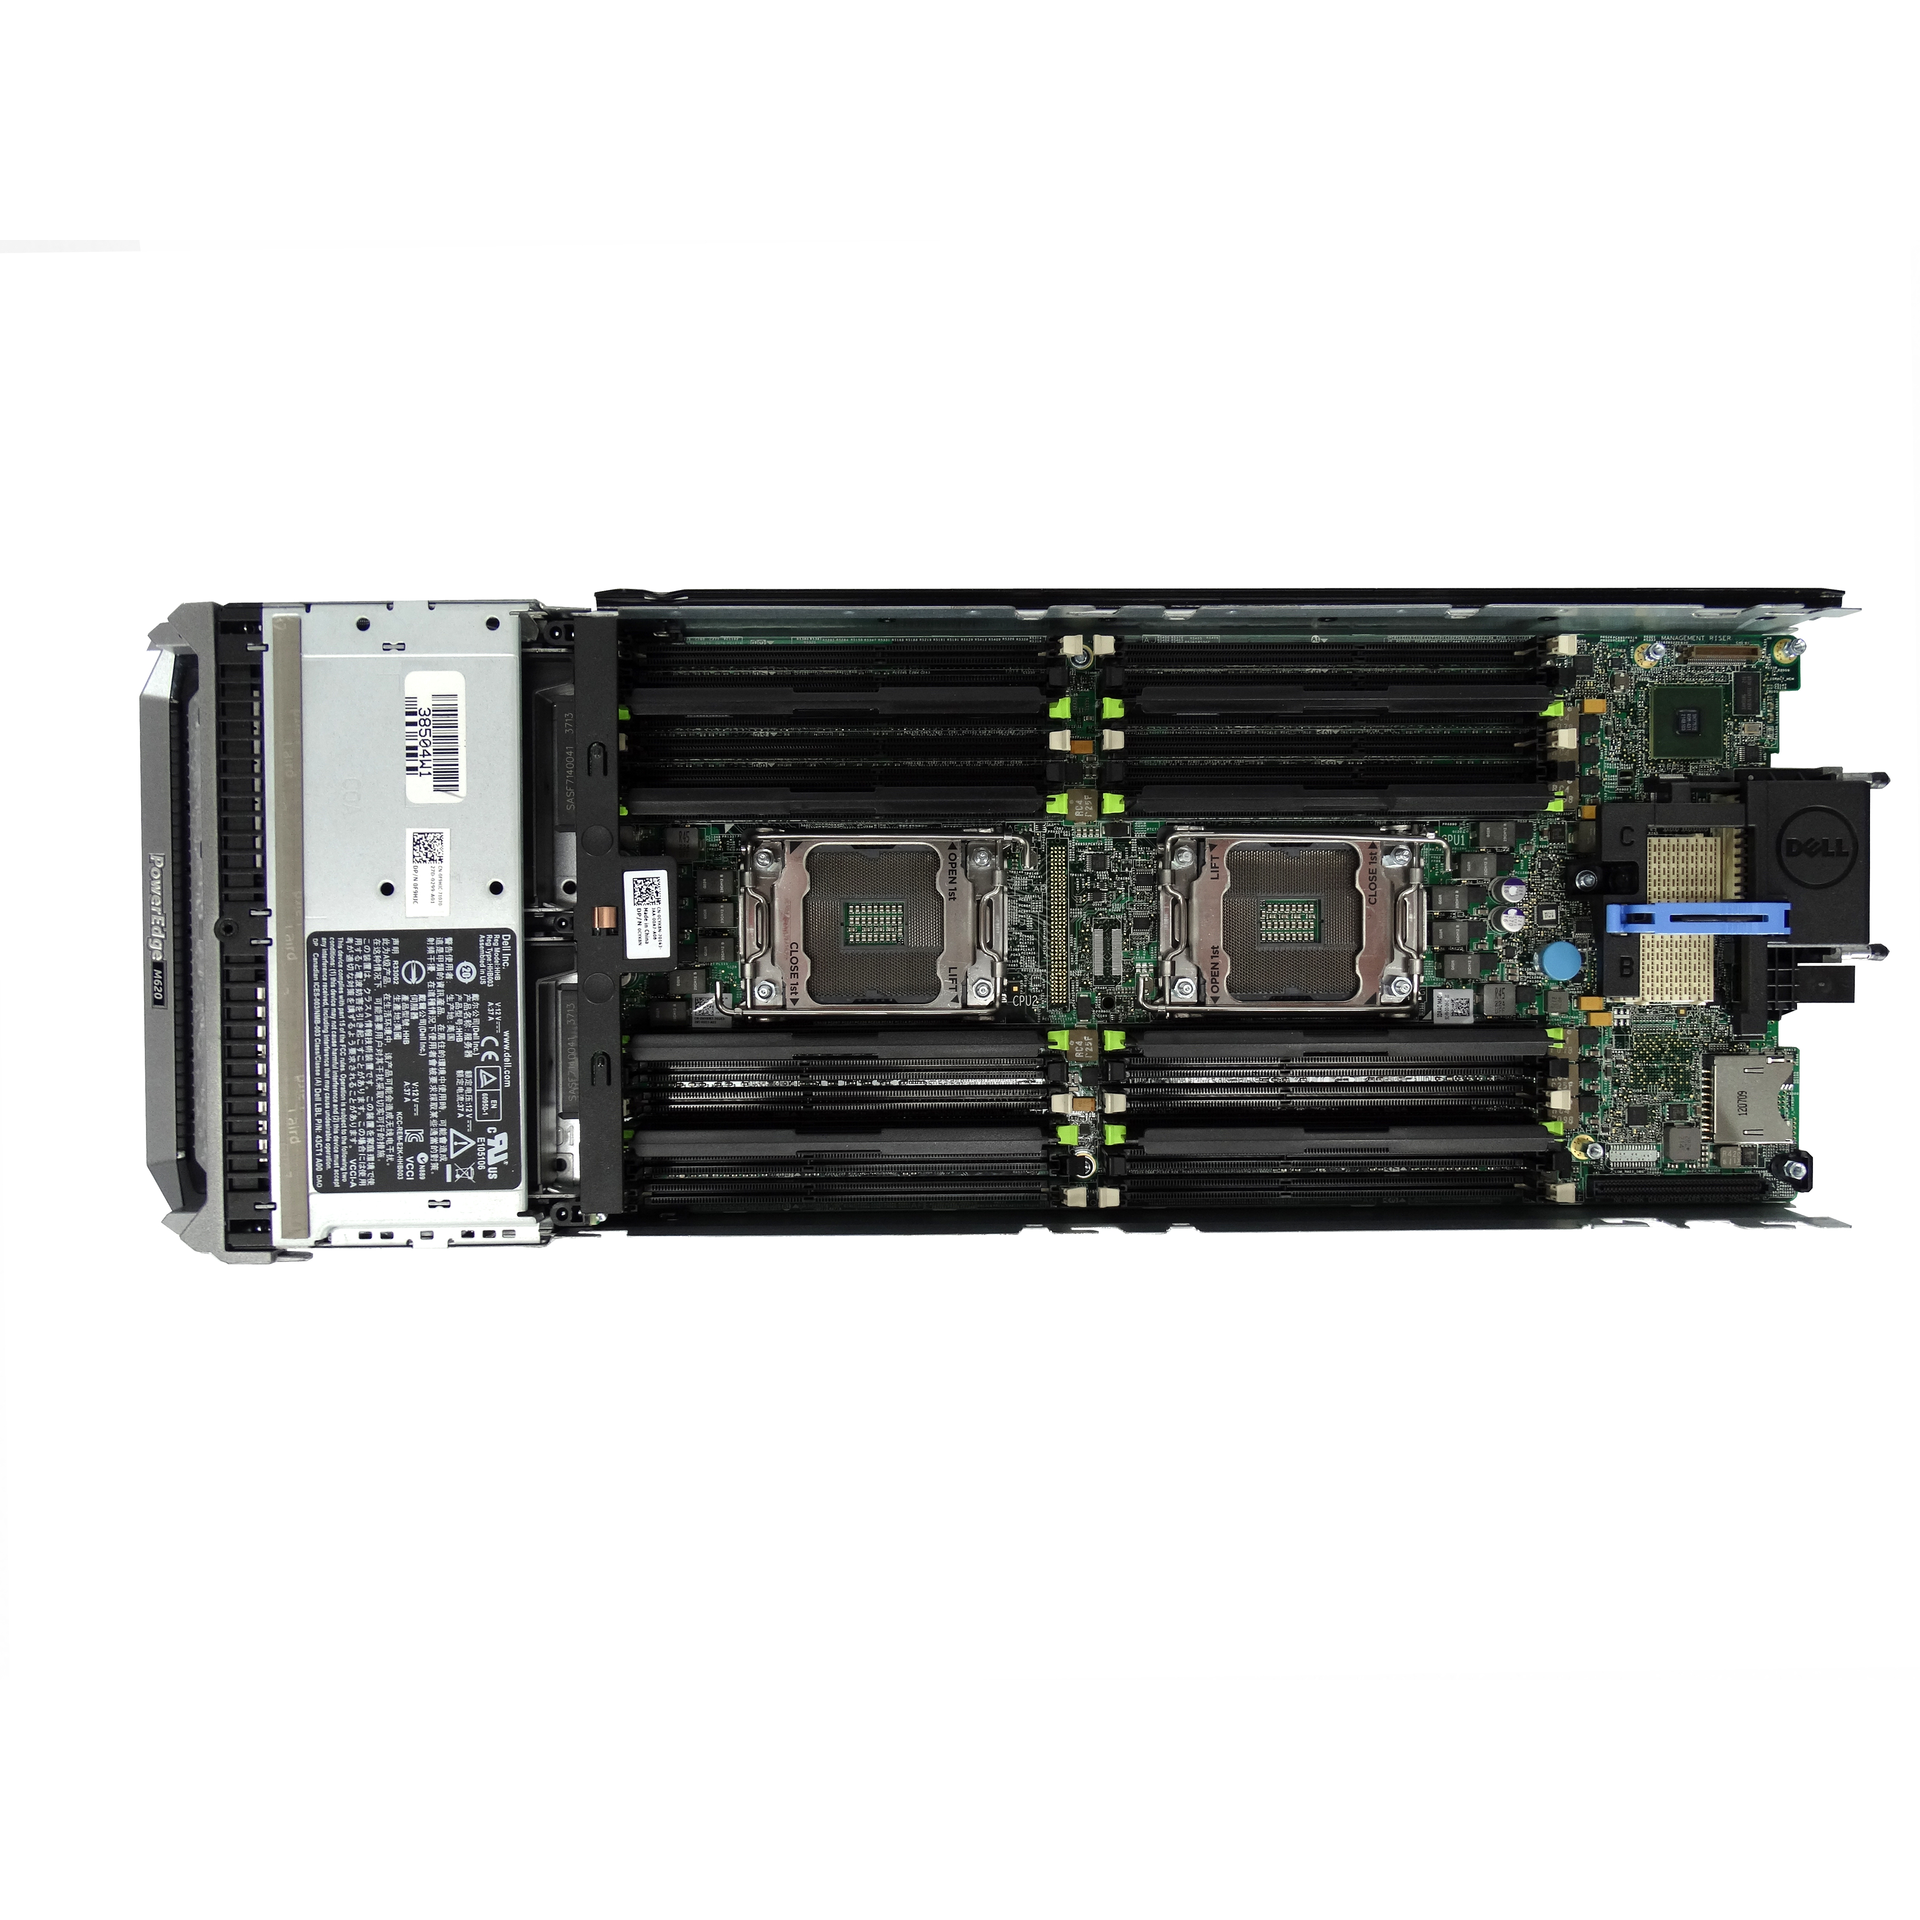 Блейд-сервер DELL PowerEdge M620, 2 процессора Intel 6C E5-2630v2 2.60GHz, 48GB DRAM, PERC H310, 2x10Gb 57810-k, 2x500GB SAS